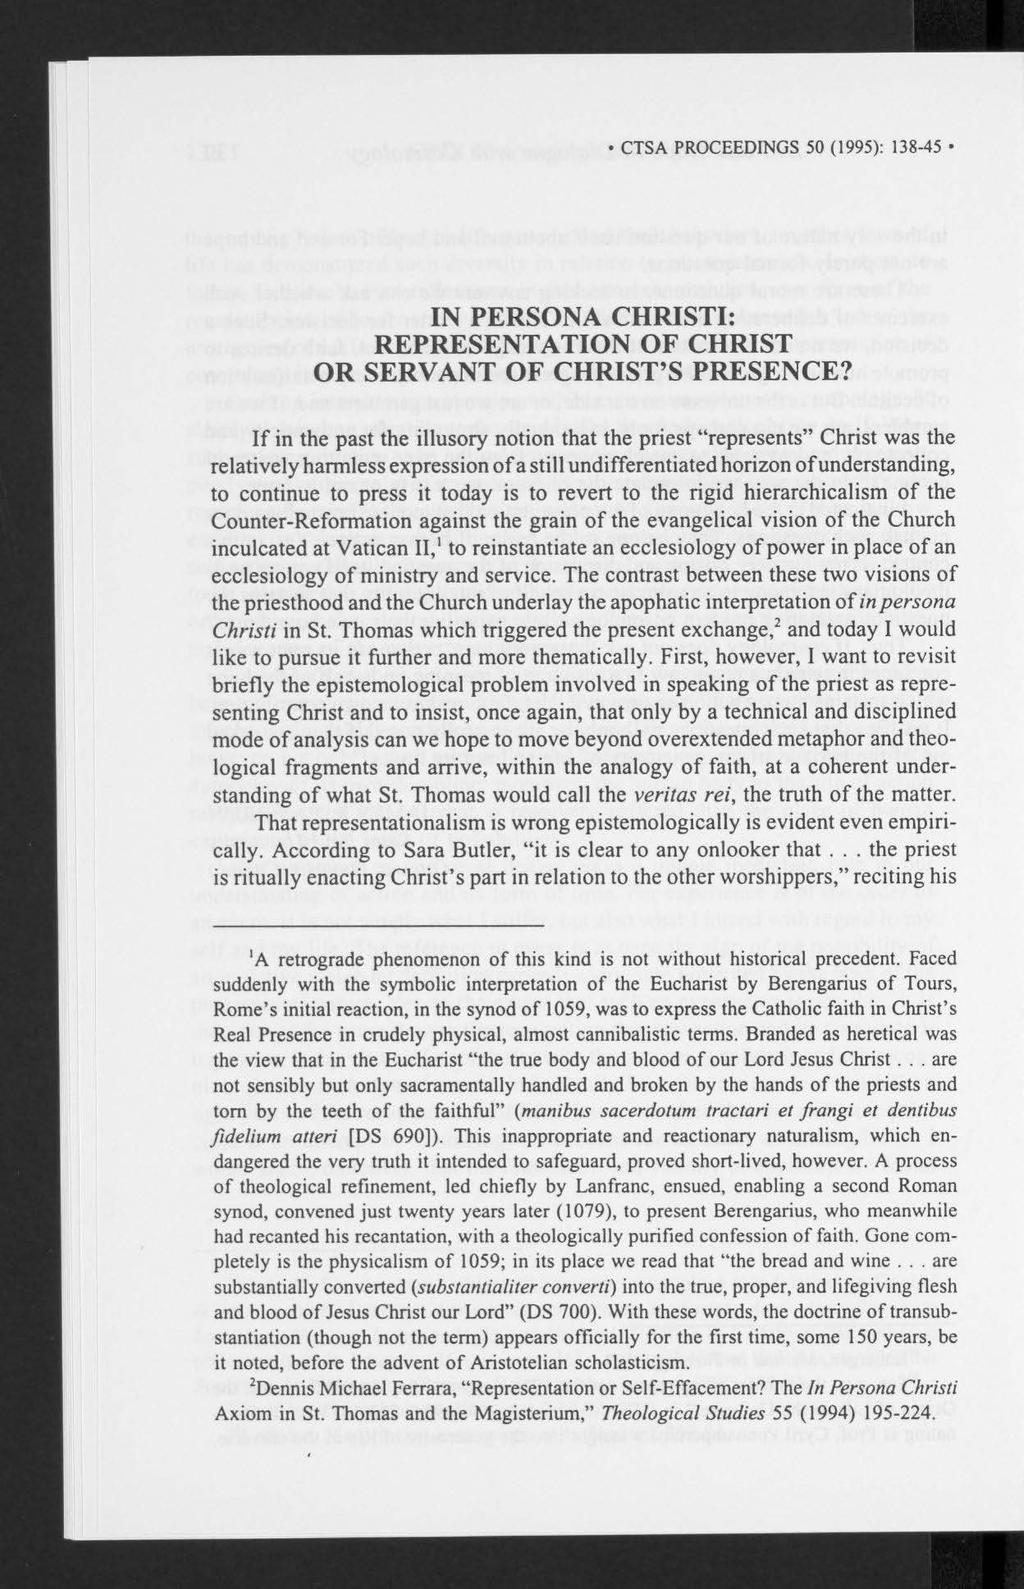 CTSA PROCEEDINGS 50 (1995): 138-45 IN PERSONA CHRISTI: REPRESENTATION OF CHRIST OR SERVANT OF CHRIST'S PRESENCE?